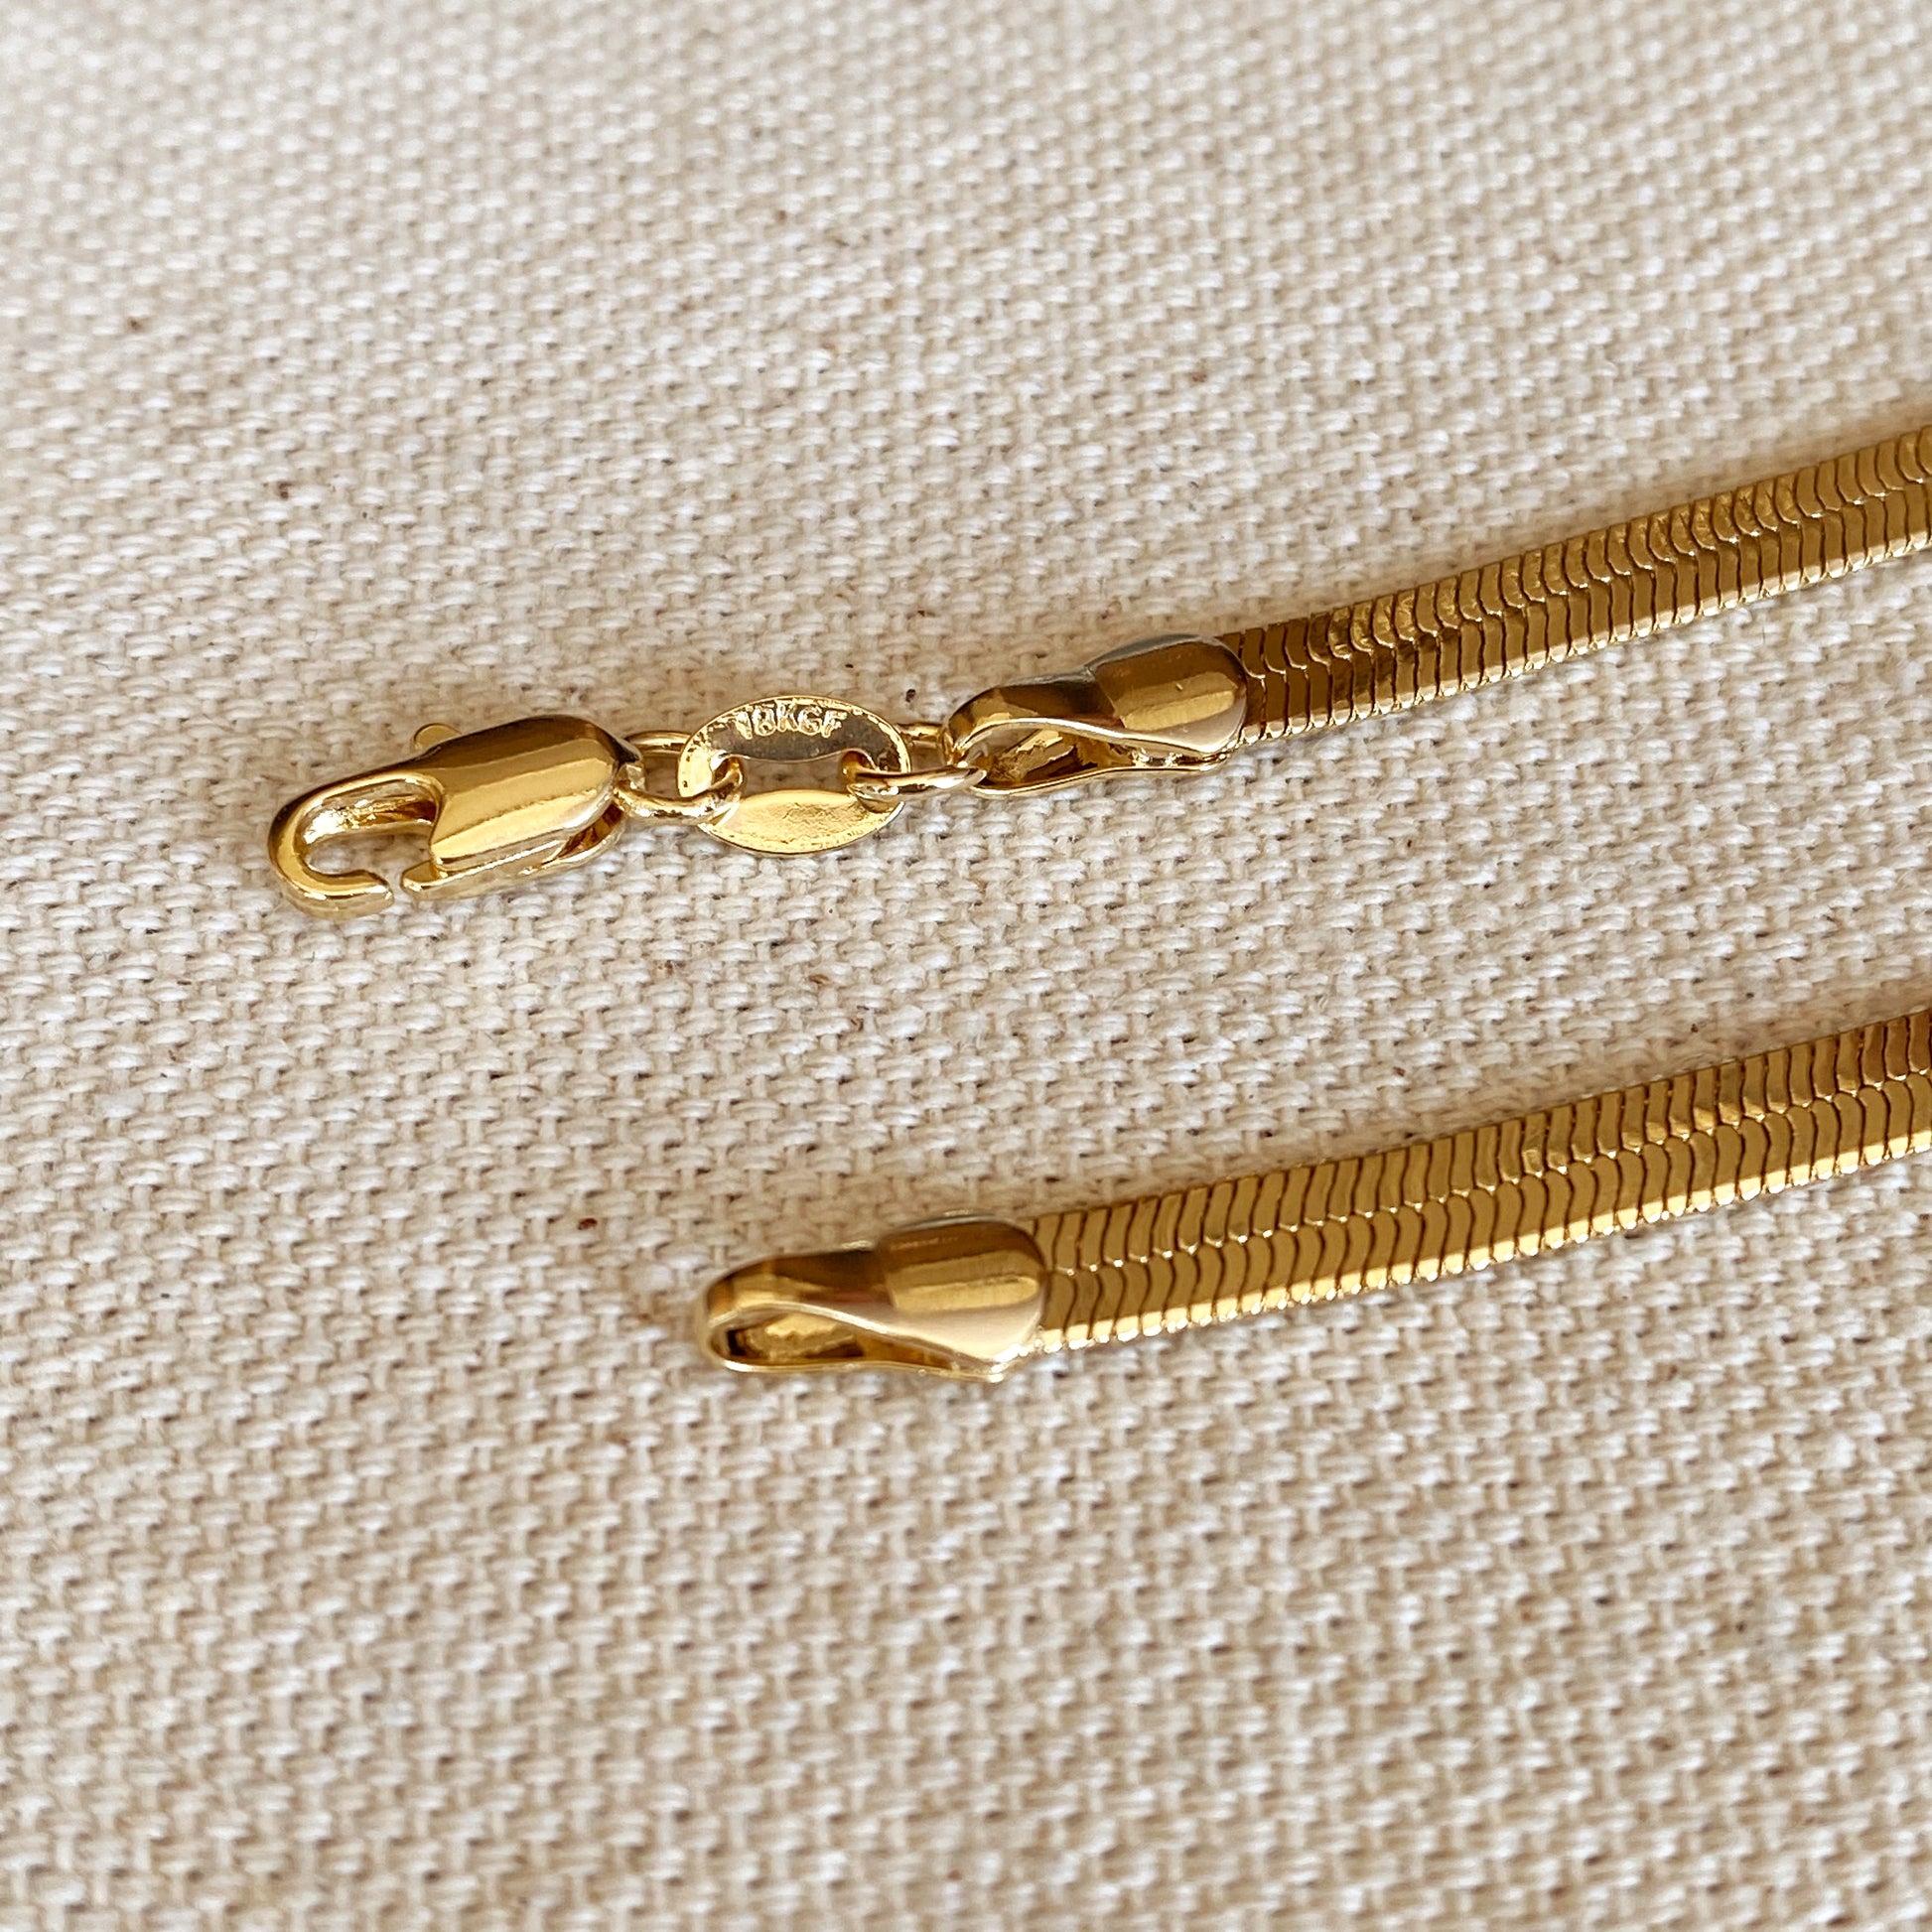 GoldFi 18k Gold Filled 4.0mm Thickness Herringbone Chain